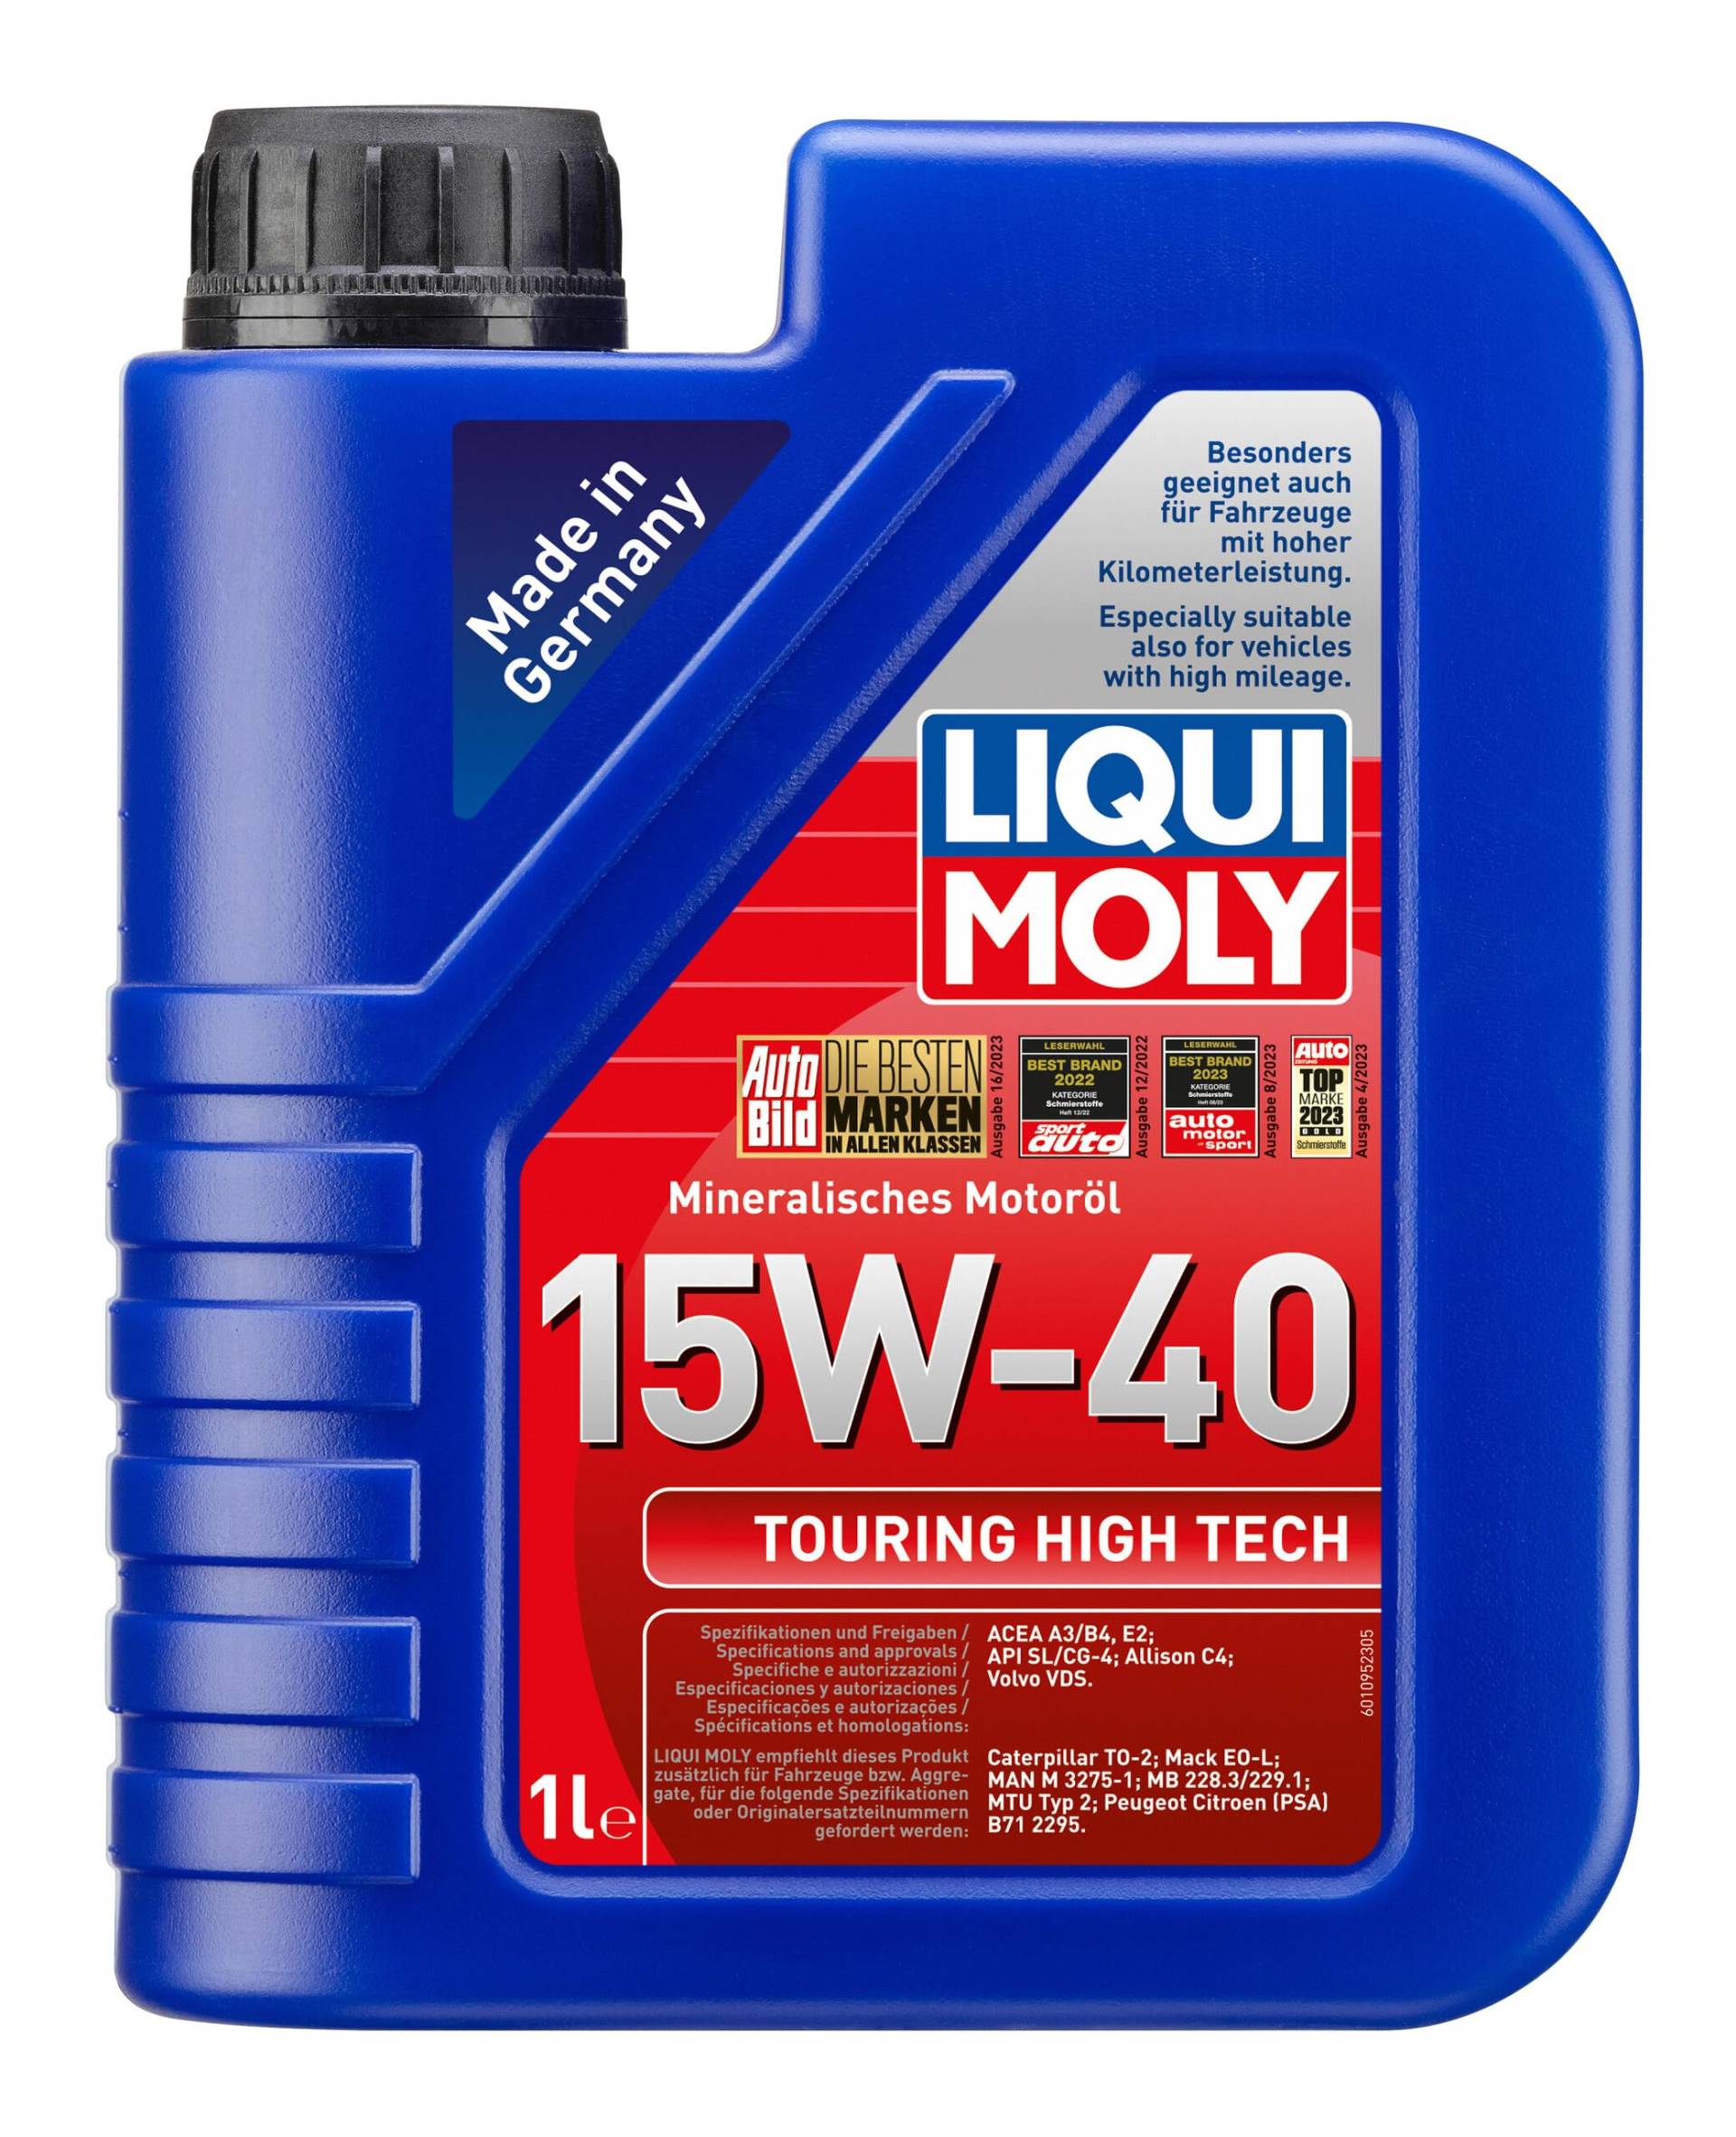 LIQUI MOLY Touring High Tech 15W-40 | 1 L | mineralisches Motoröl | Art.-Nr.: 1095 von Liqui Moly